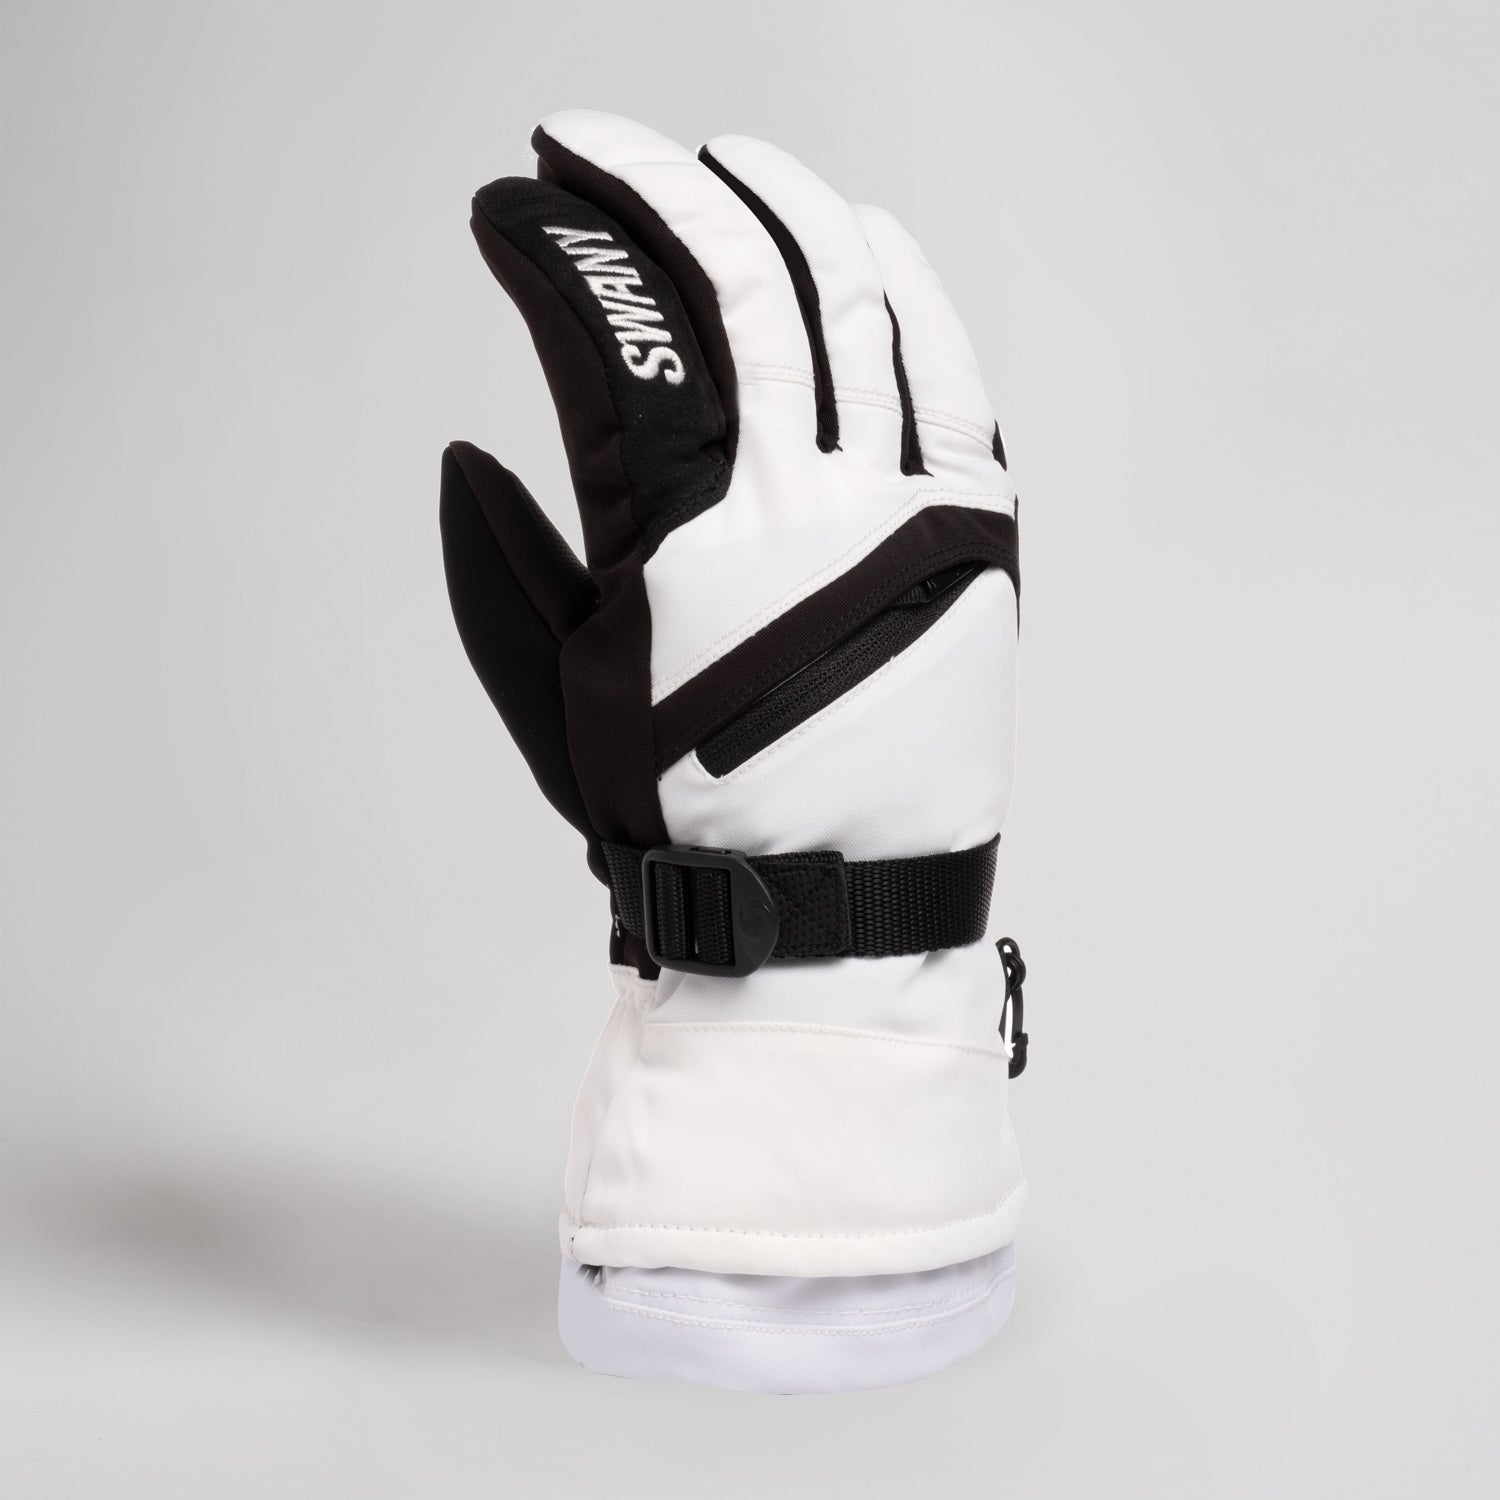 Swany X-Over GTX Glove Ladies - White Black